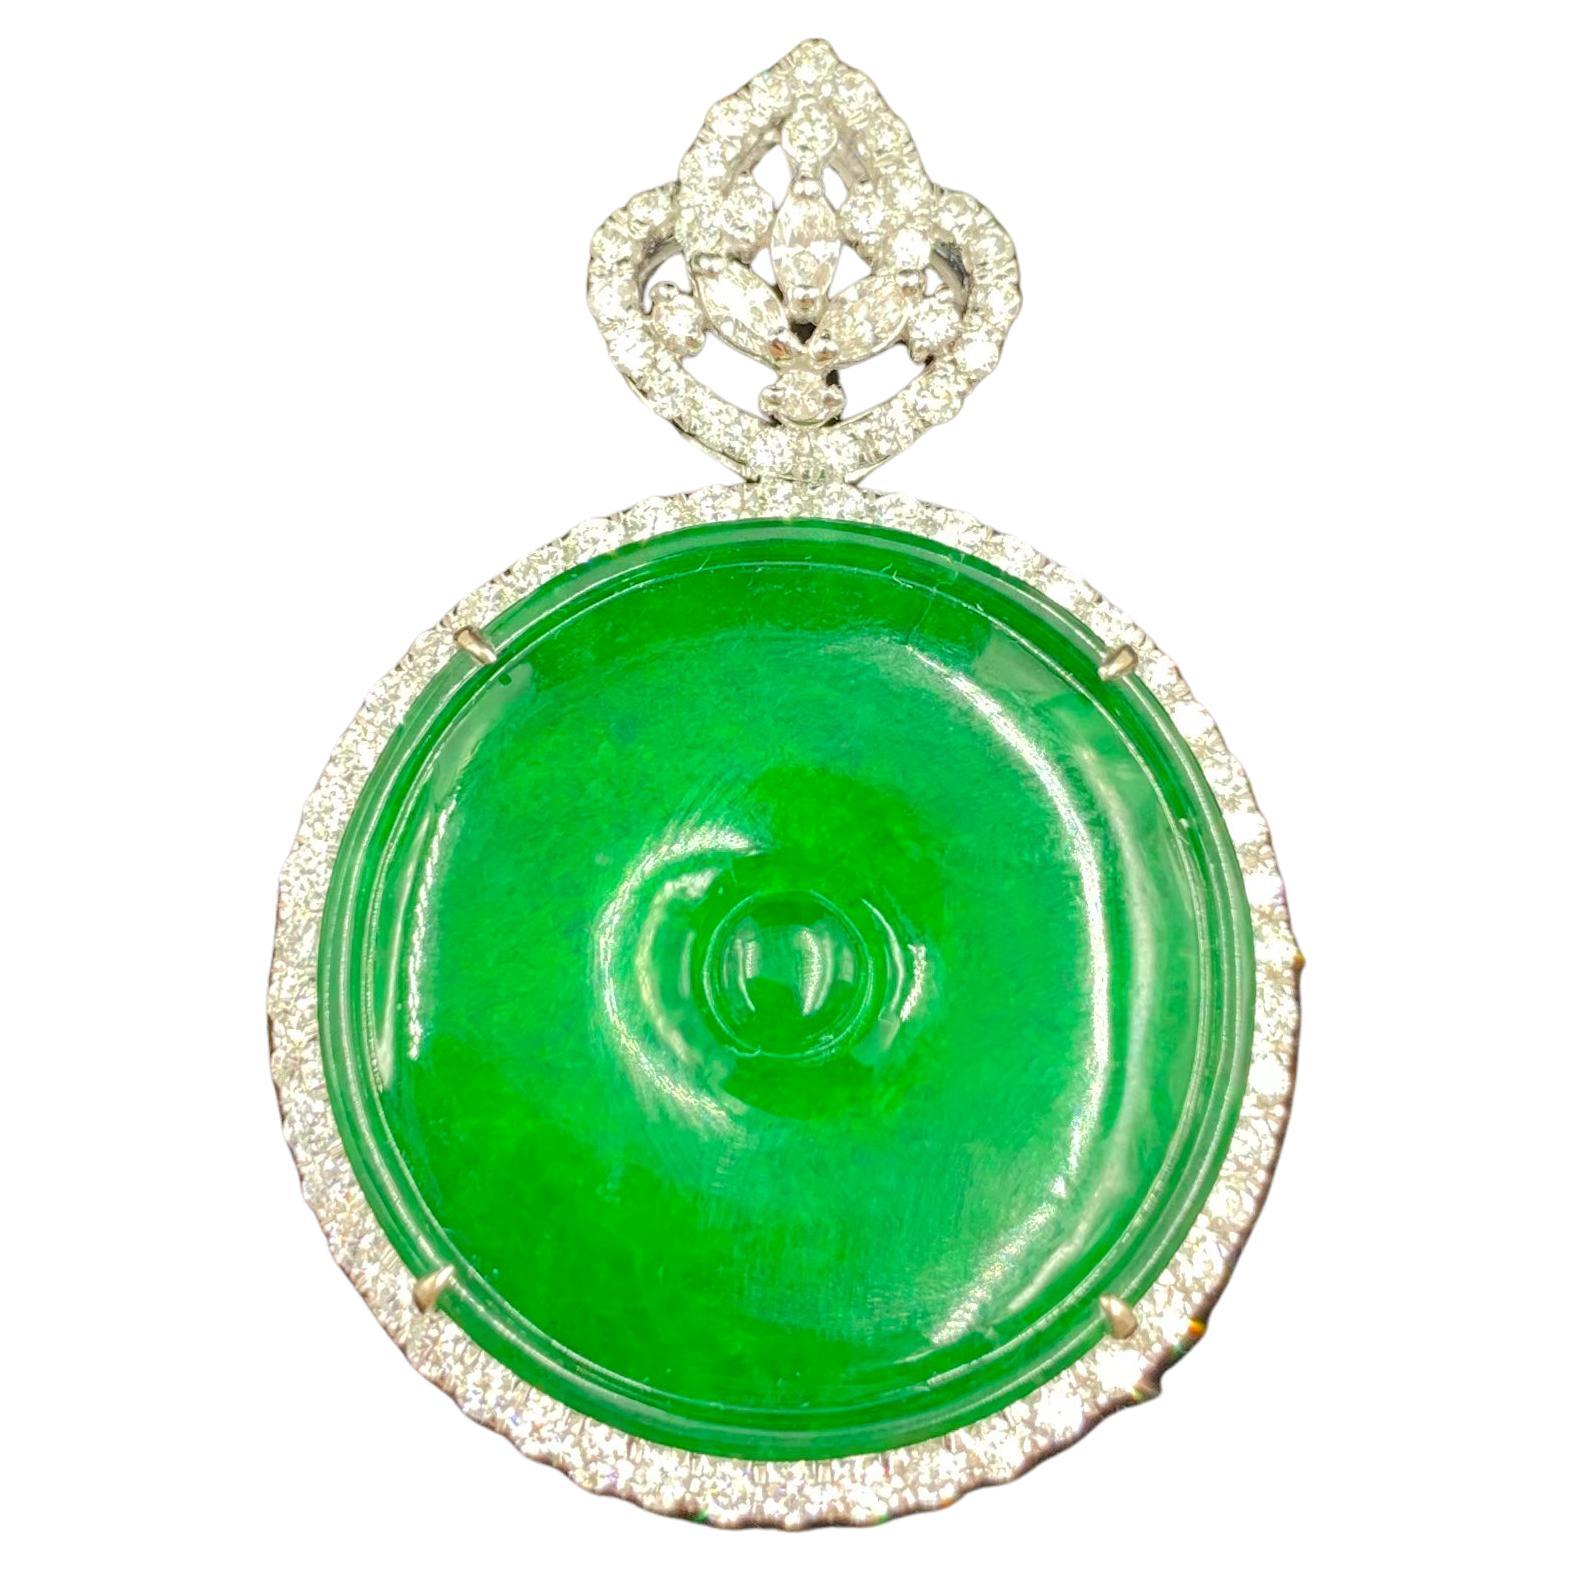 Pendentif en or 18 carats avec diamants et disque en jade vert certifié de type naturel A de 66,73 carats